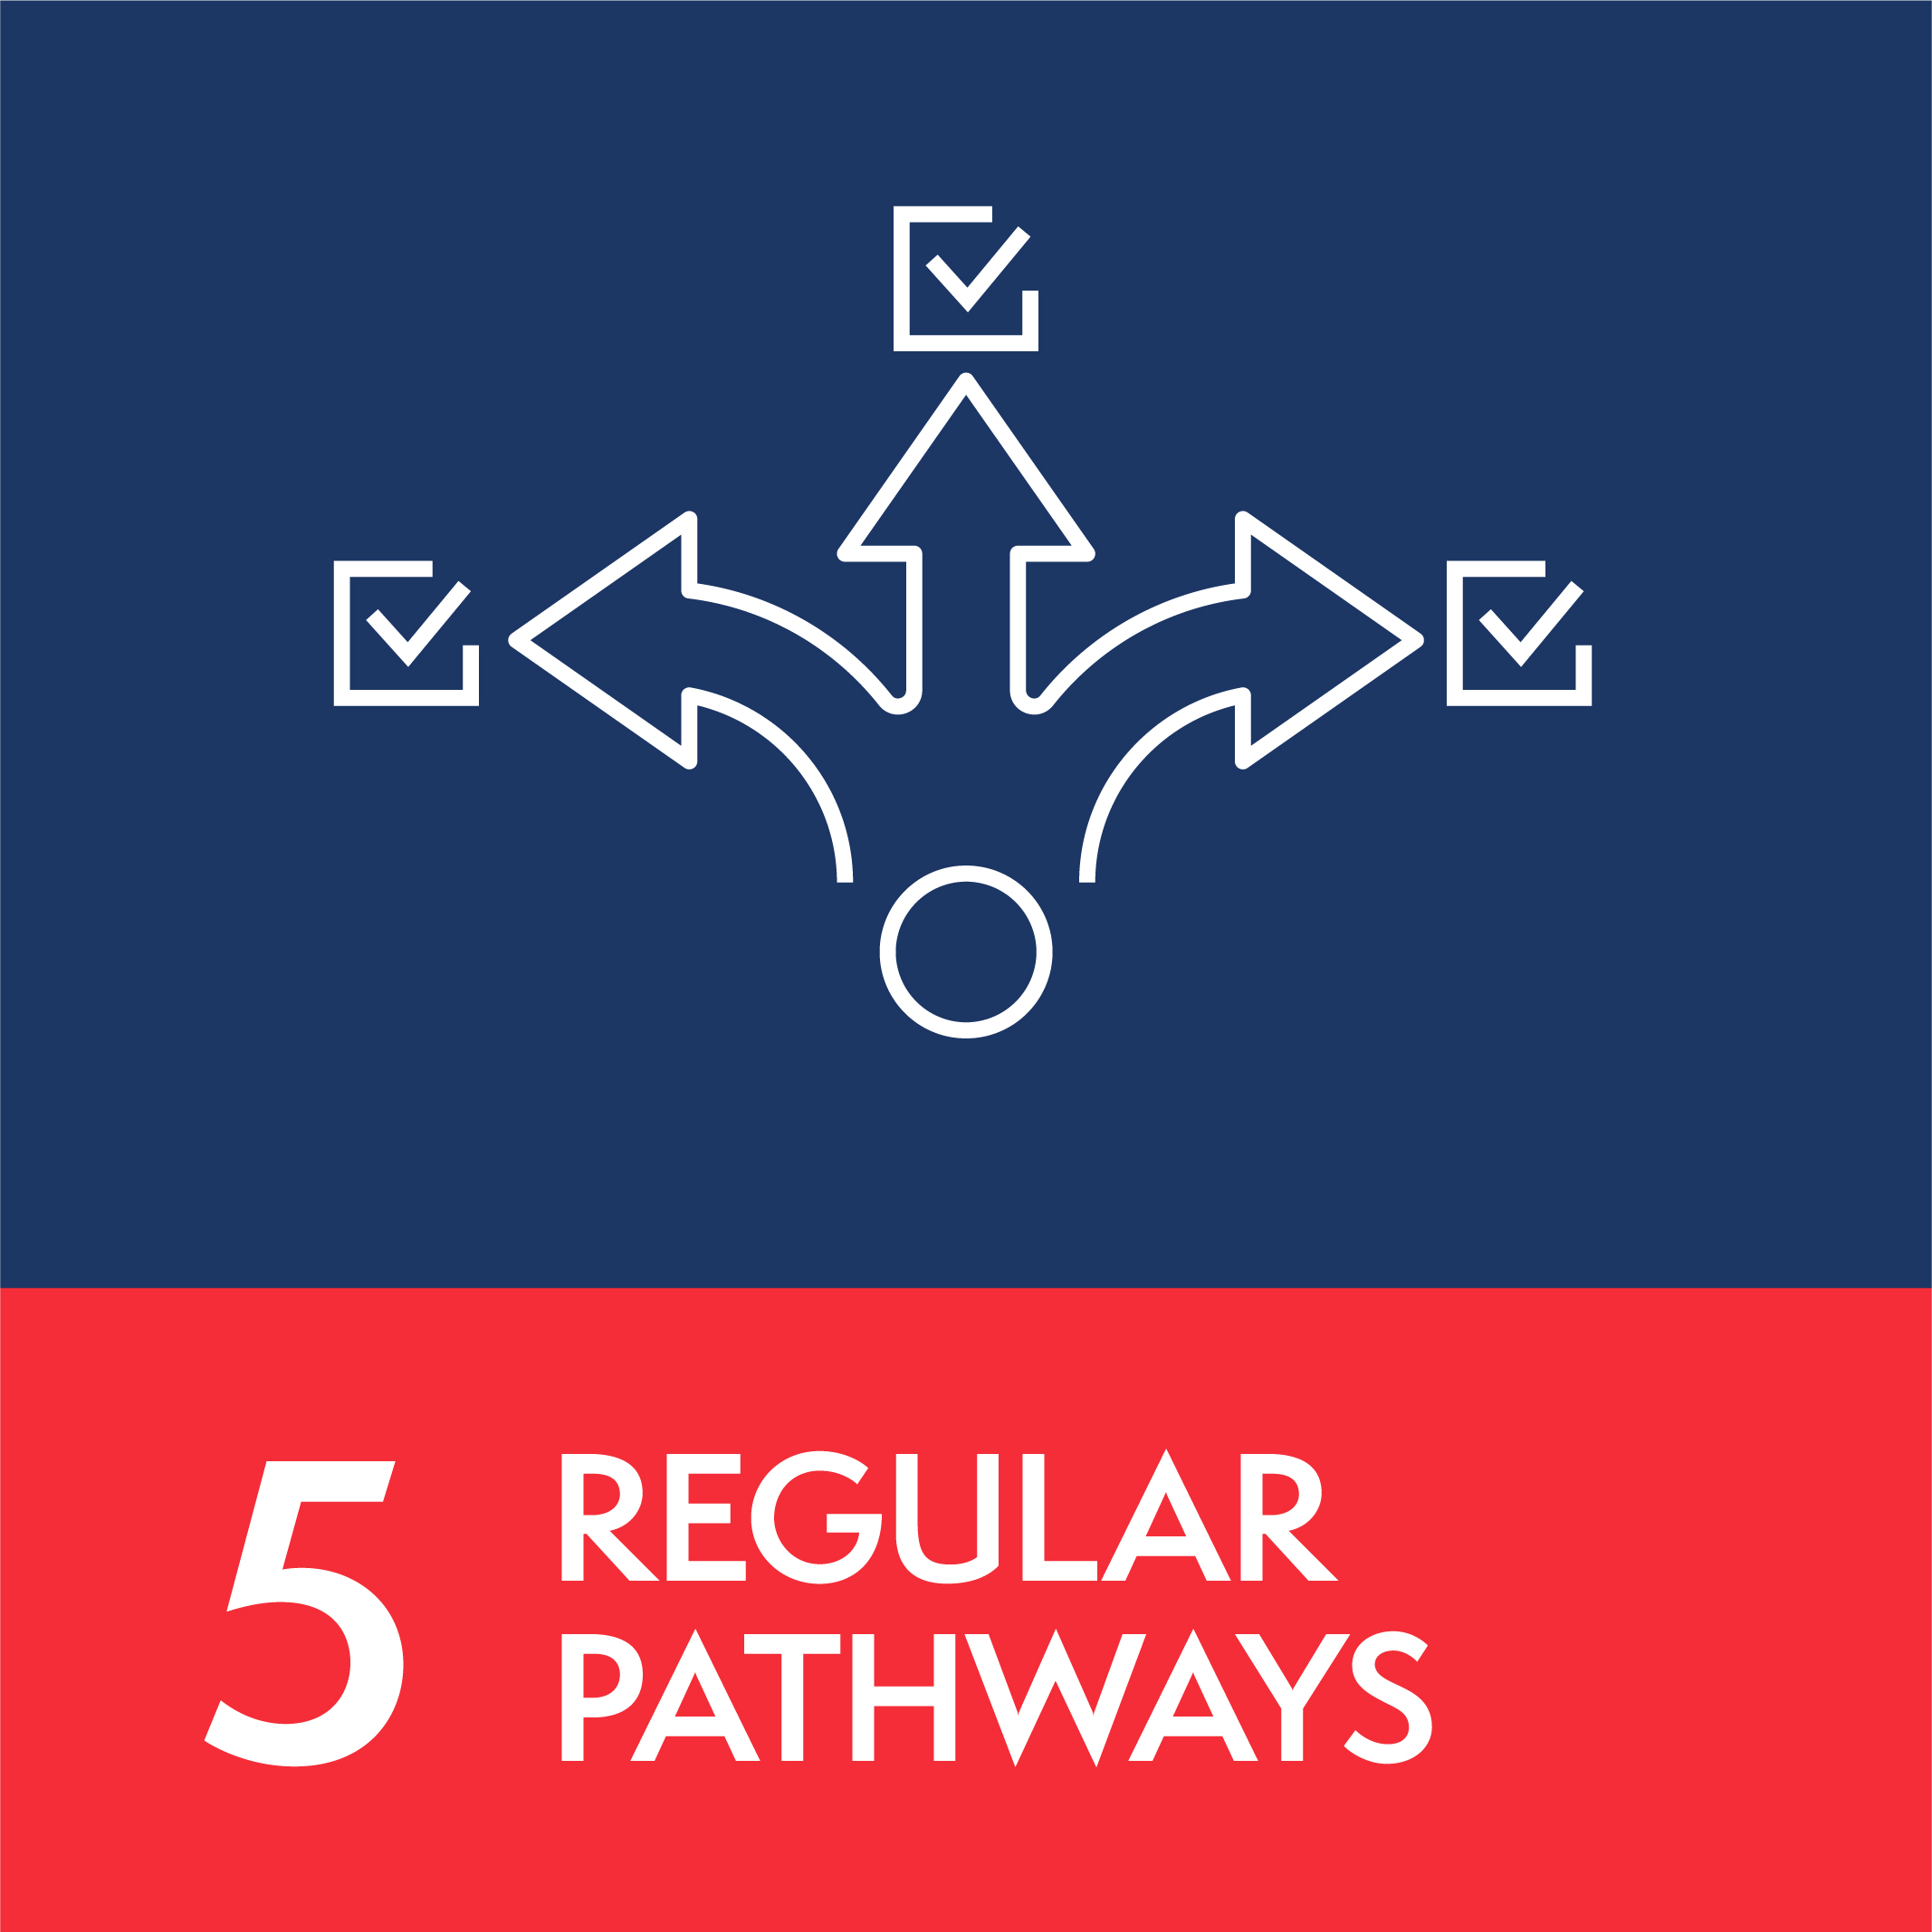 5 - Regular pathways